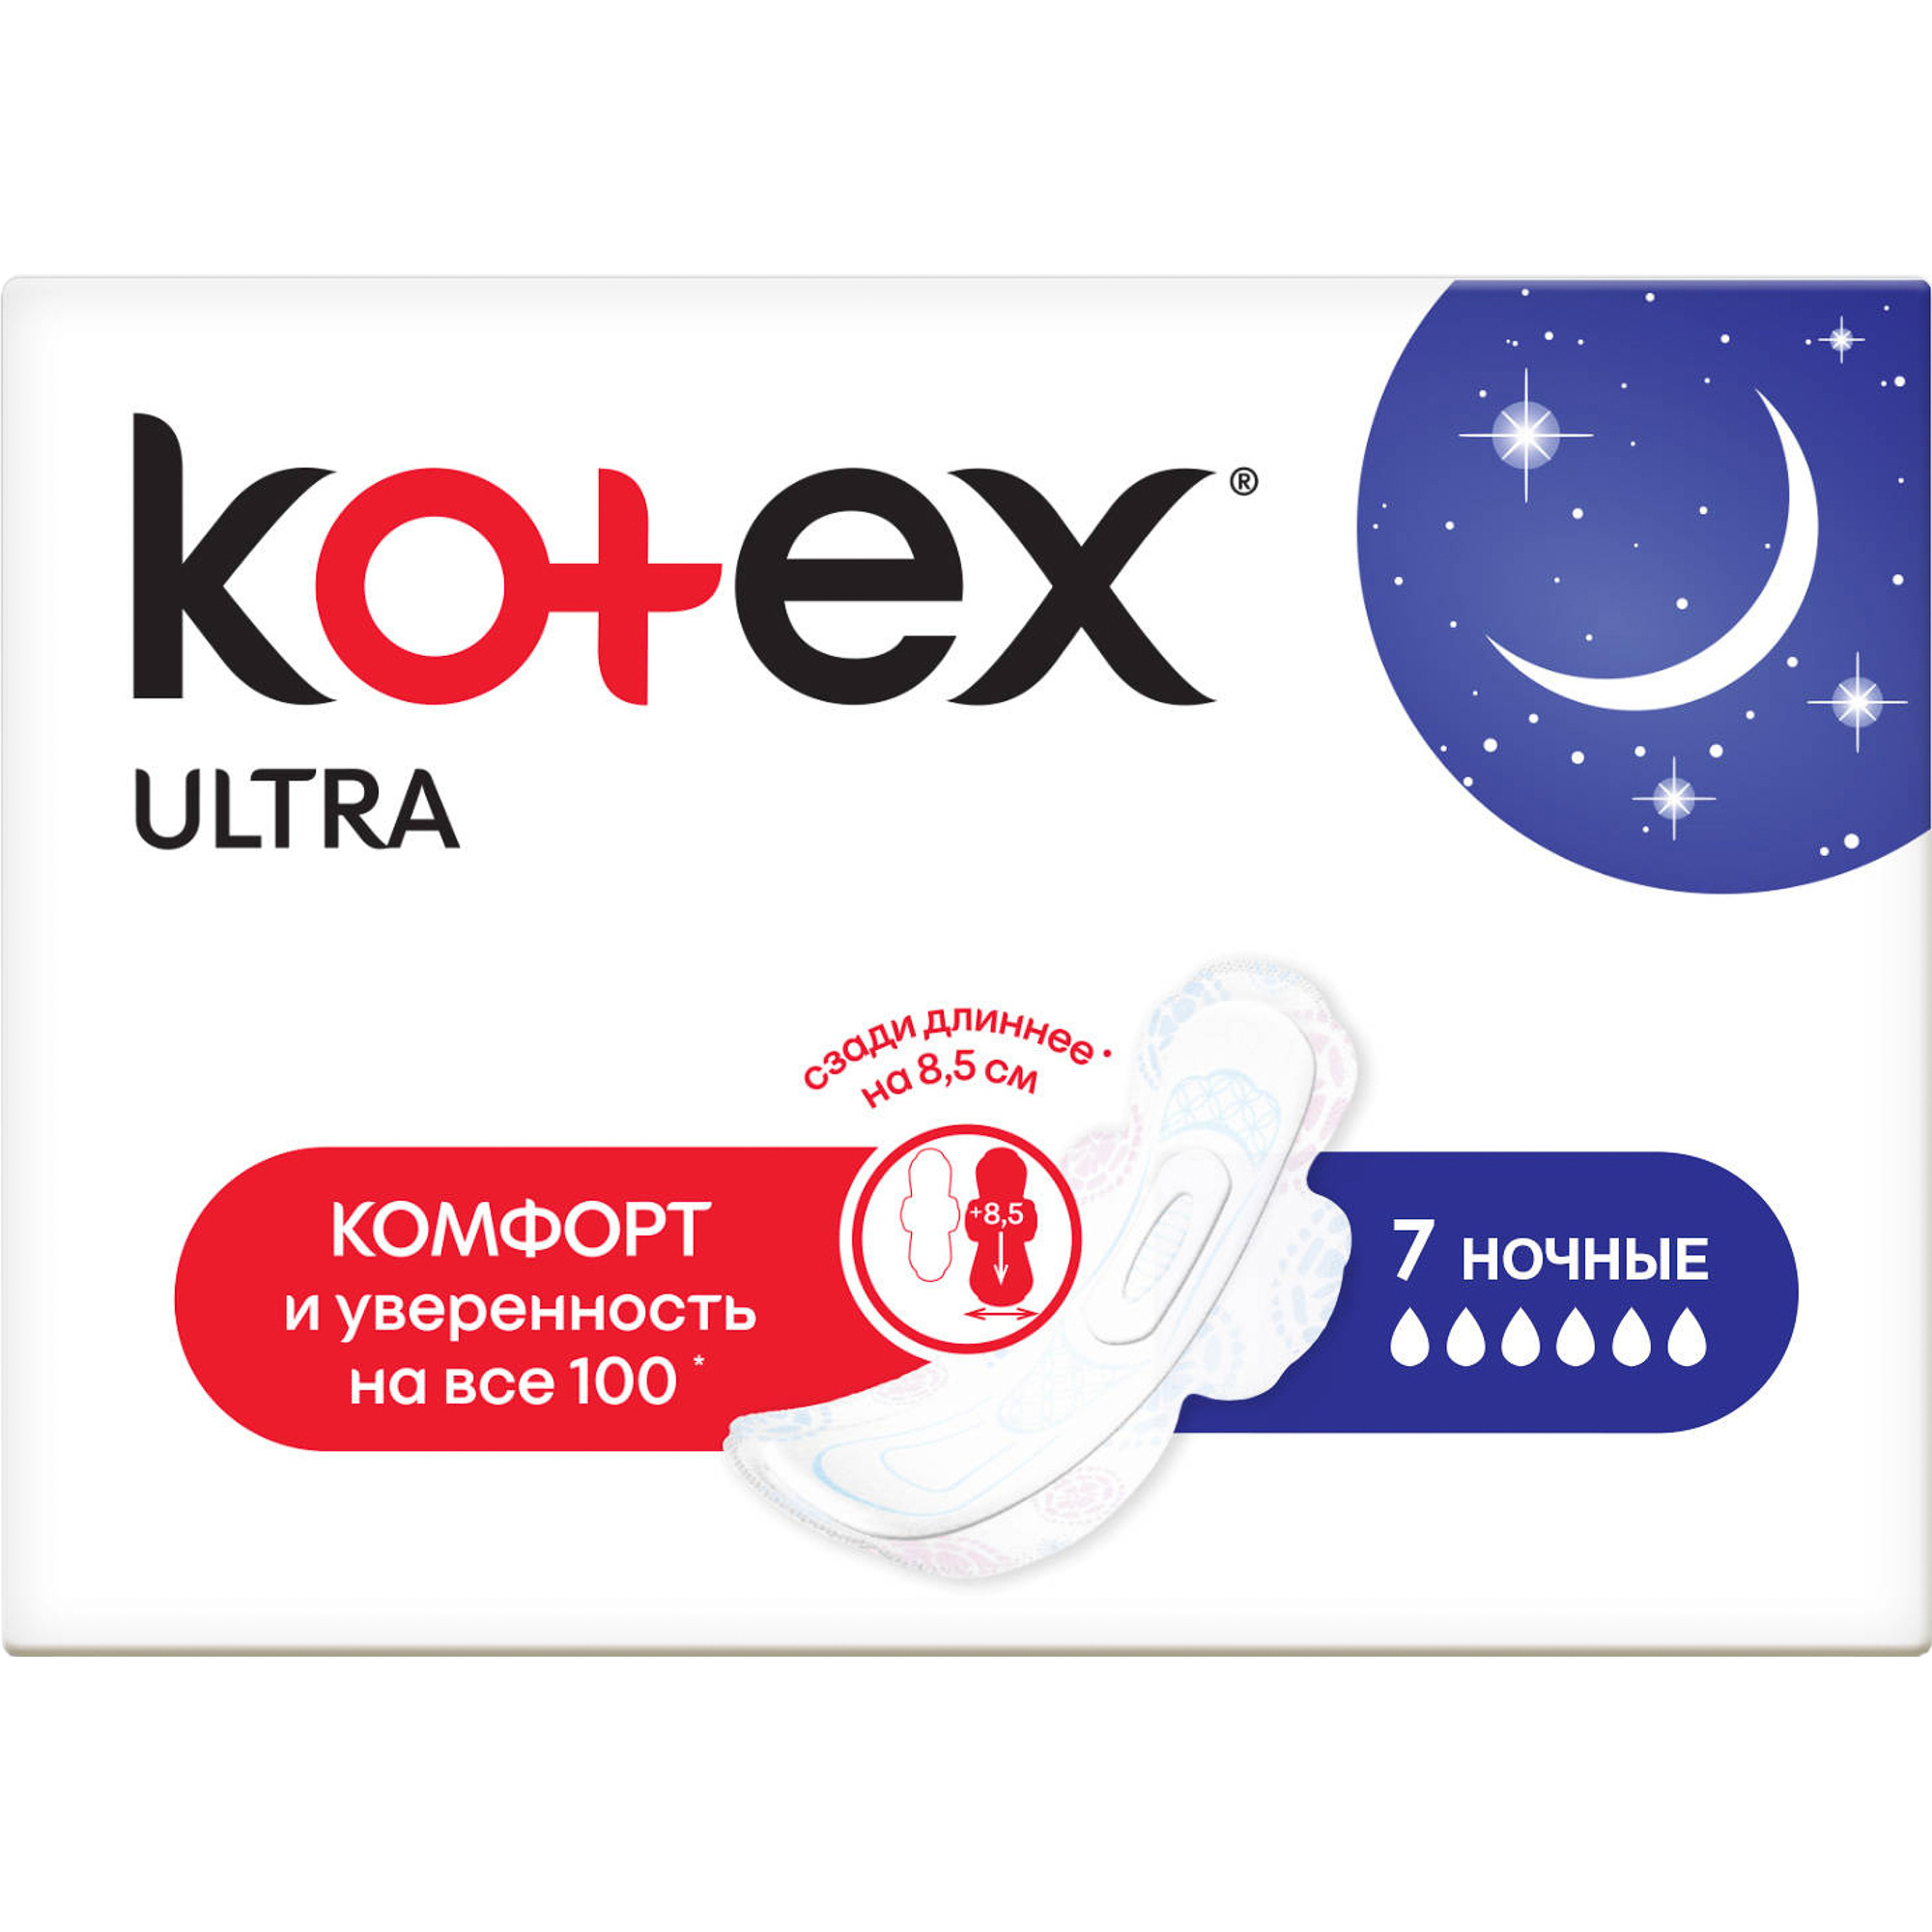 Прокладки Kotex Ultra Ночные 7 шт kotex прокладки ультратонкие kotex ultra ночные 7 шт